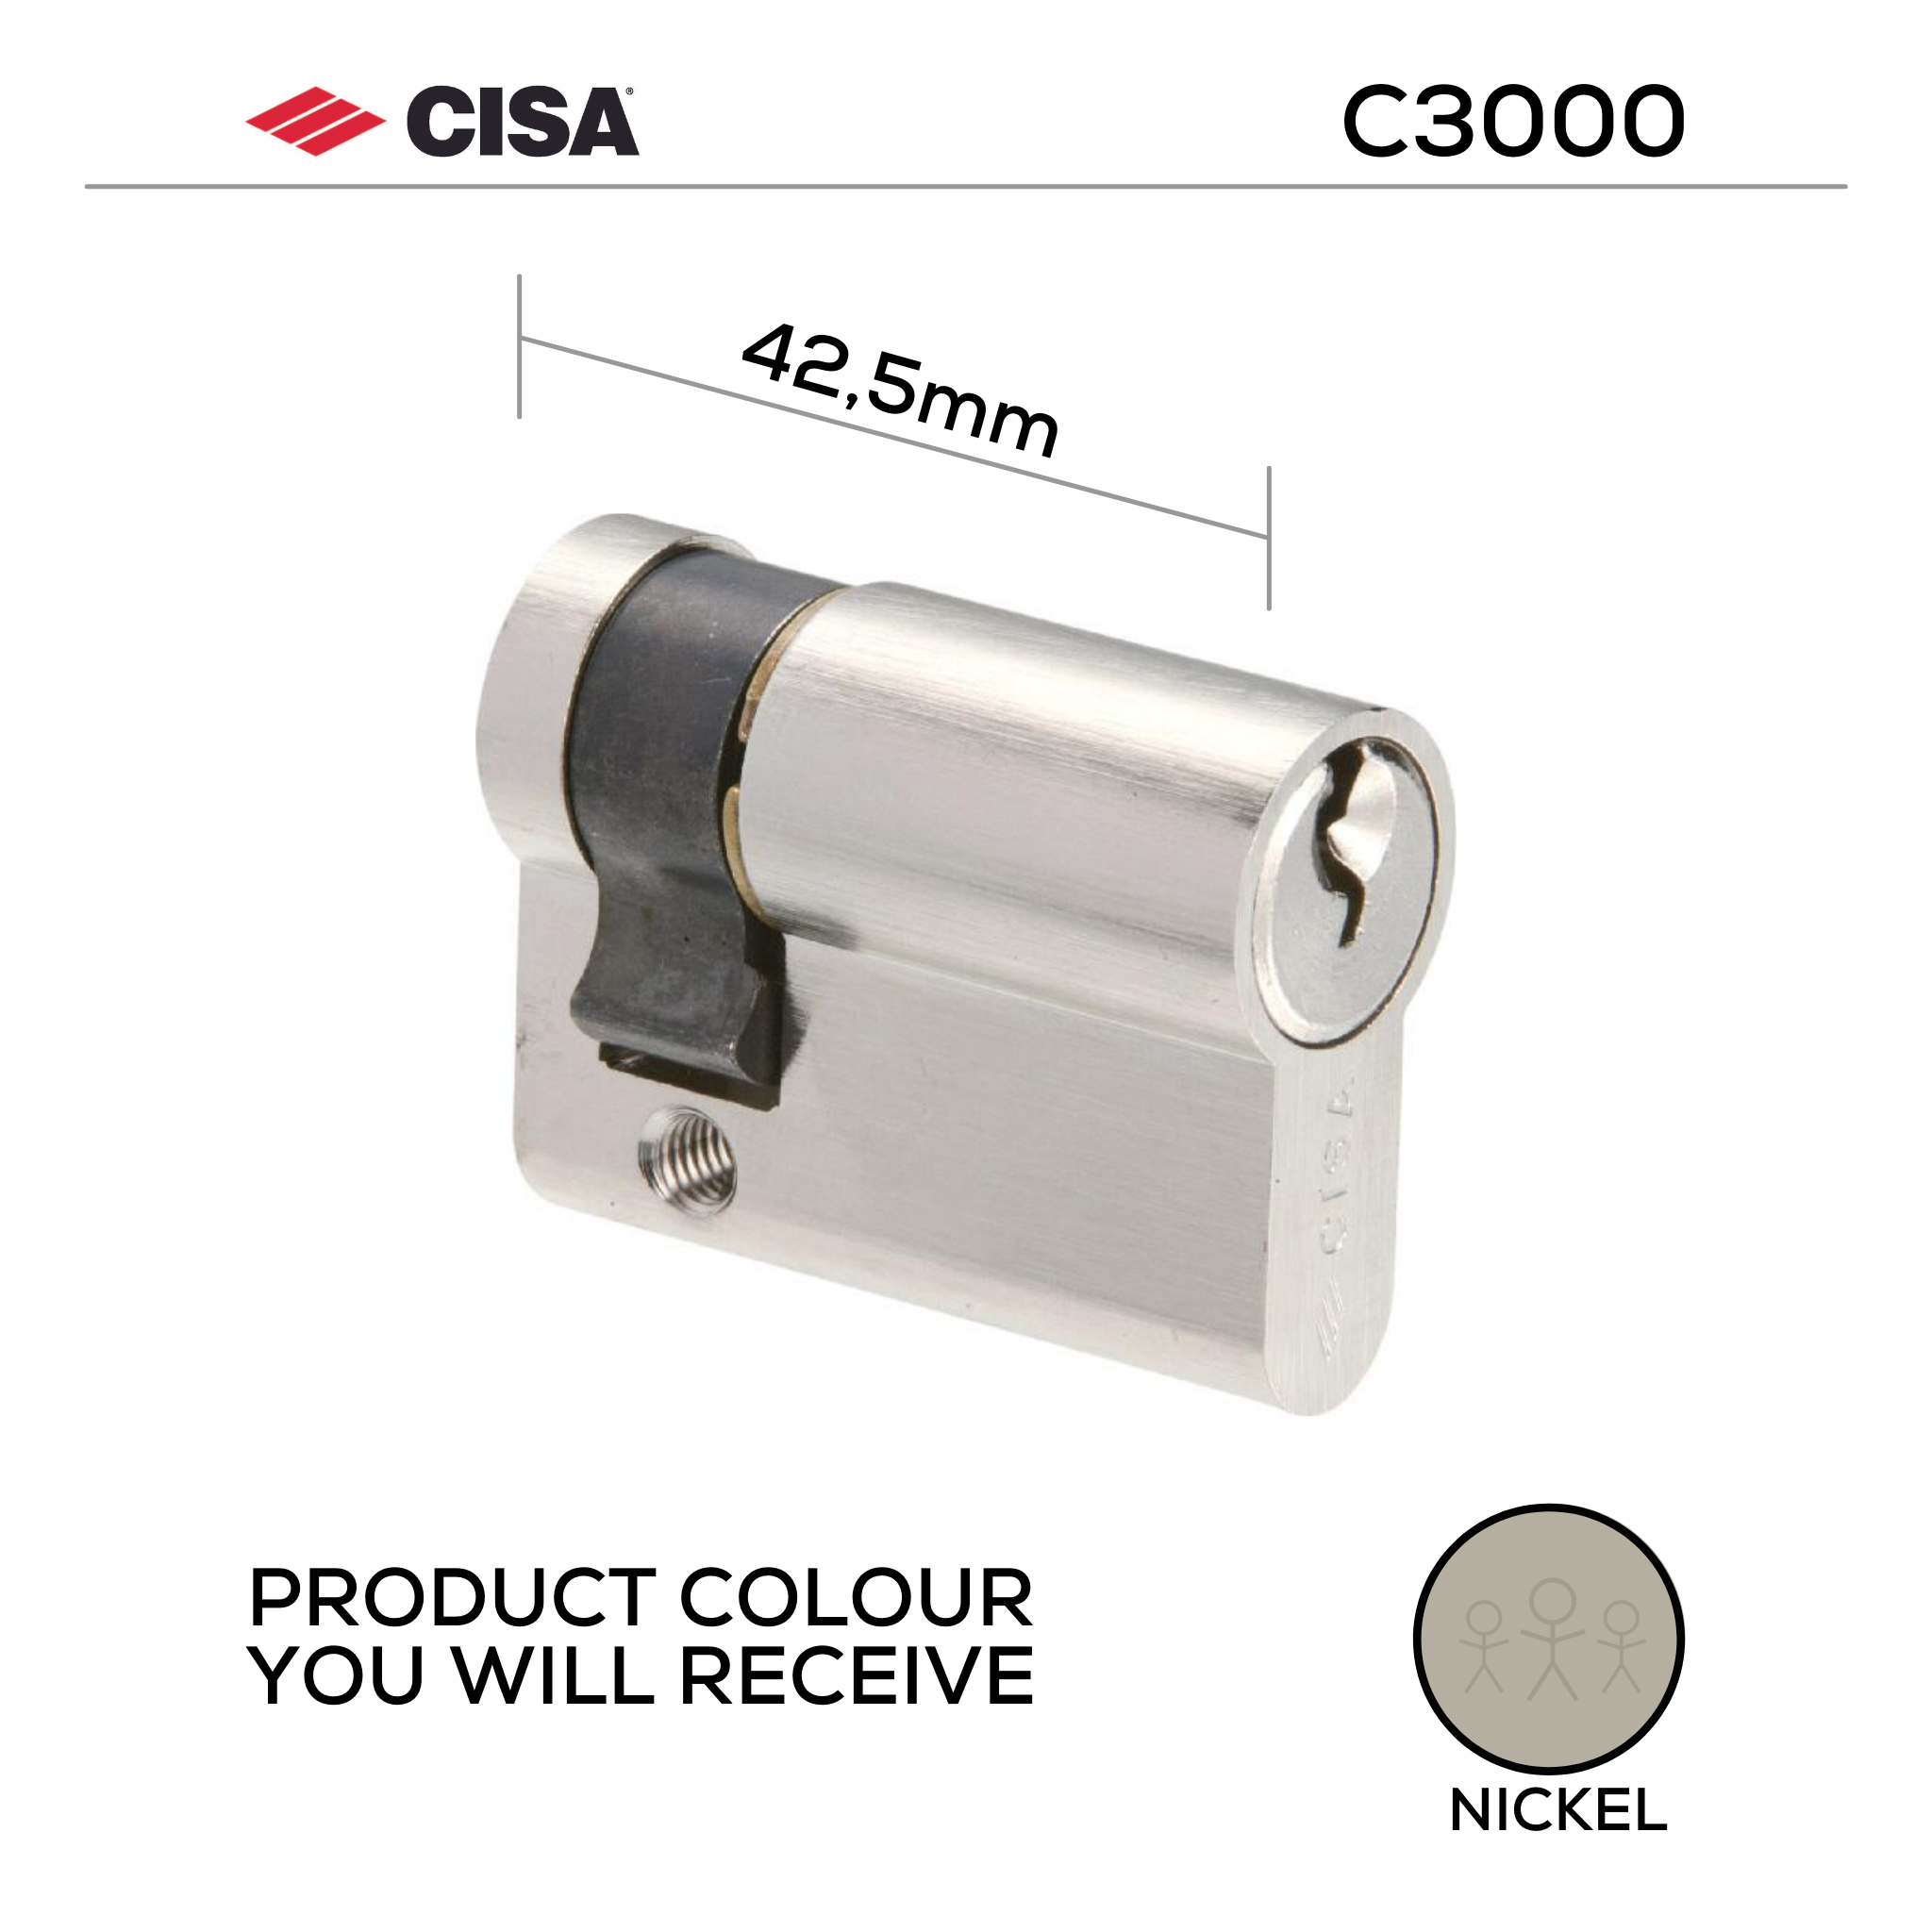 0N314-09-12-KD, 42.5mm - 32.5/10, Half (Single Cylinder), C3000, Key, Keyed to Differ (Standard), 3 Keys, 6 Pin, Nickel, CISA